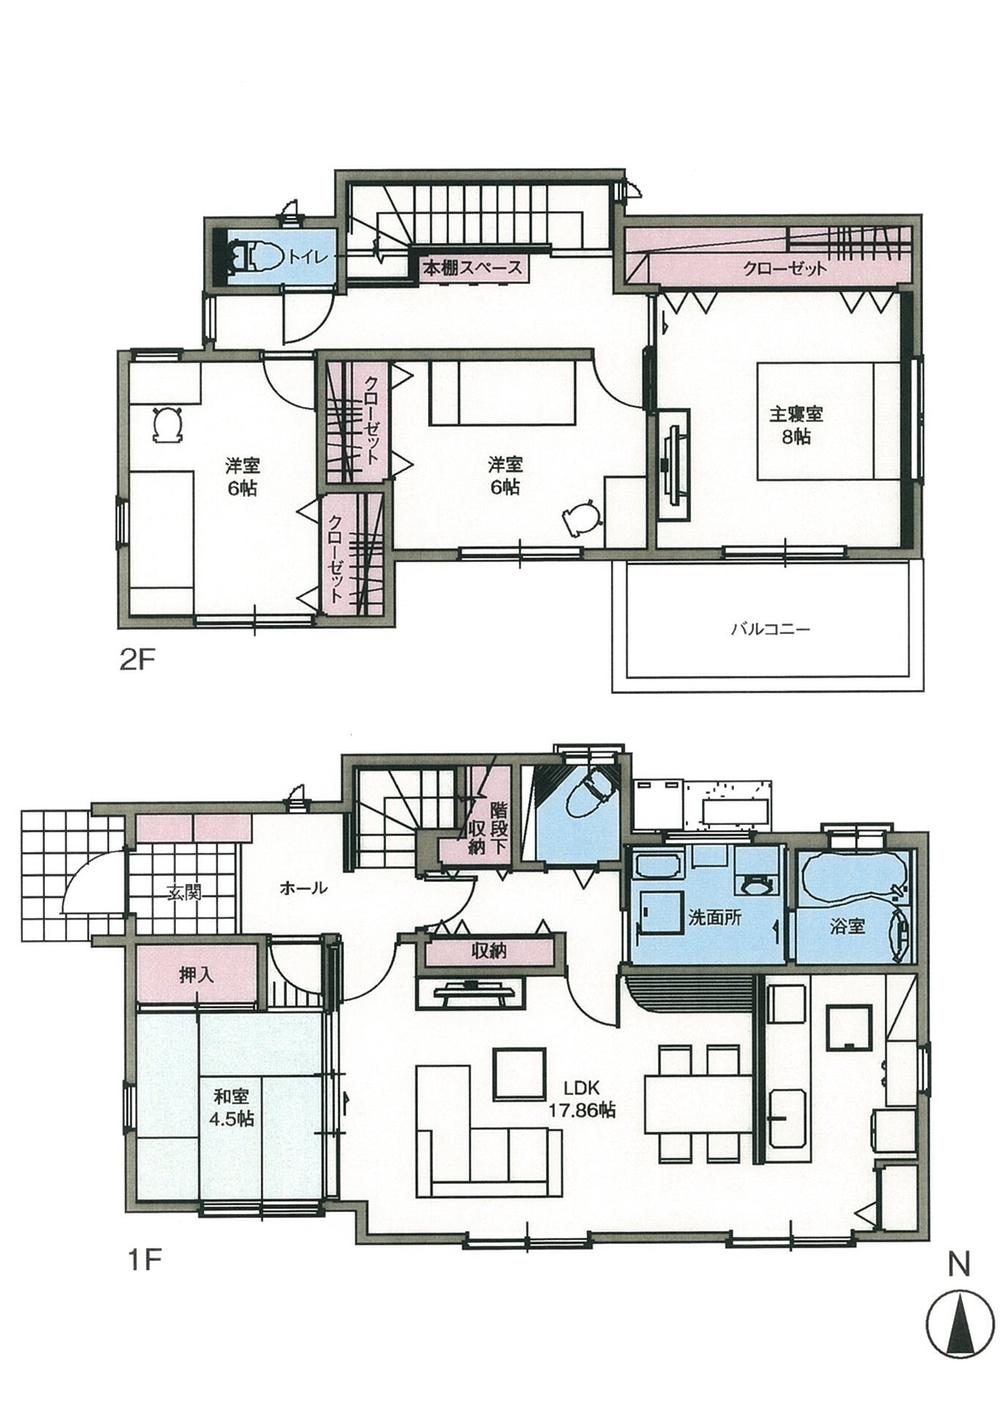 Floor plan. (F Building), Price 28.8 million yen, 4LDK, Land area 193.59 sq m , Building area 116.97 sq m